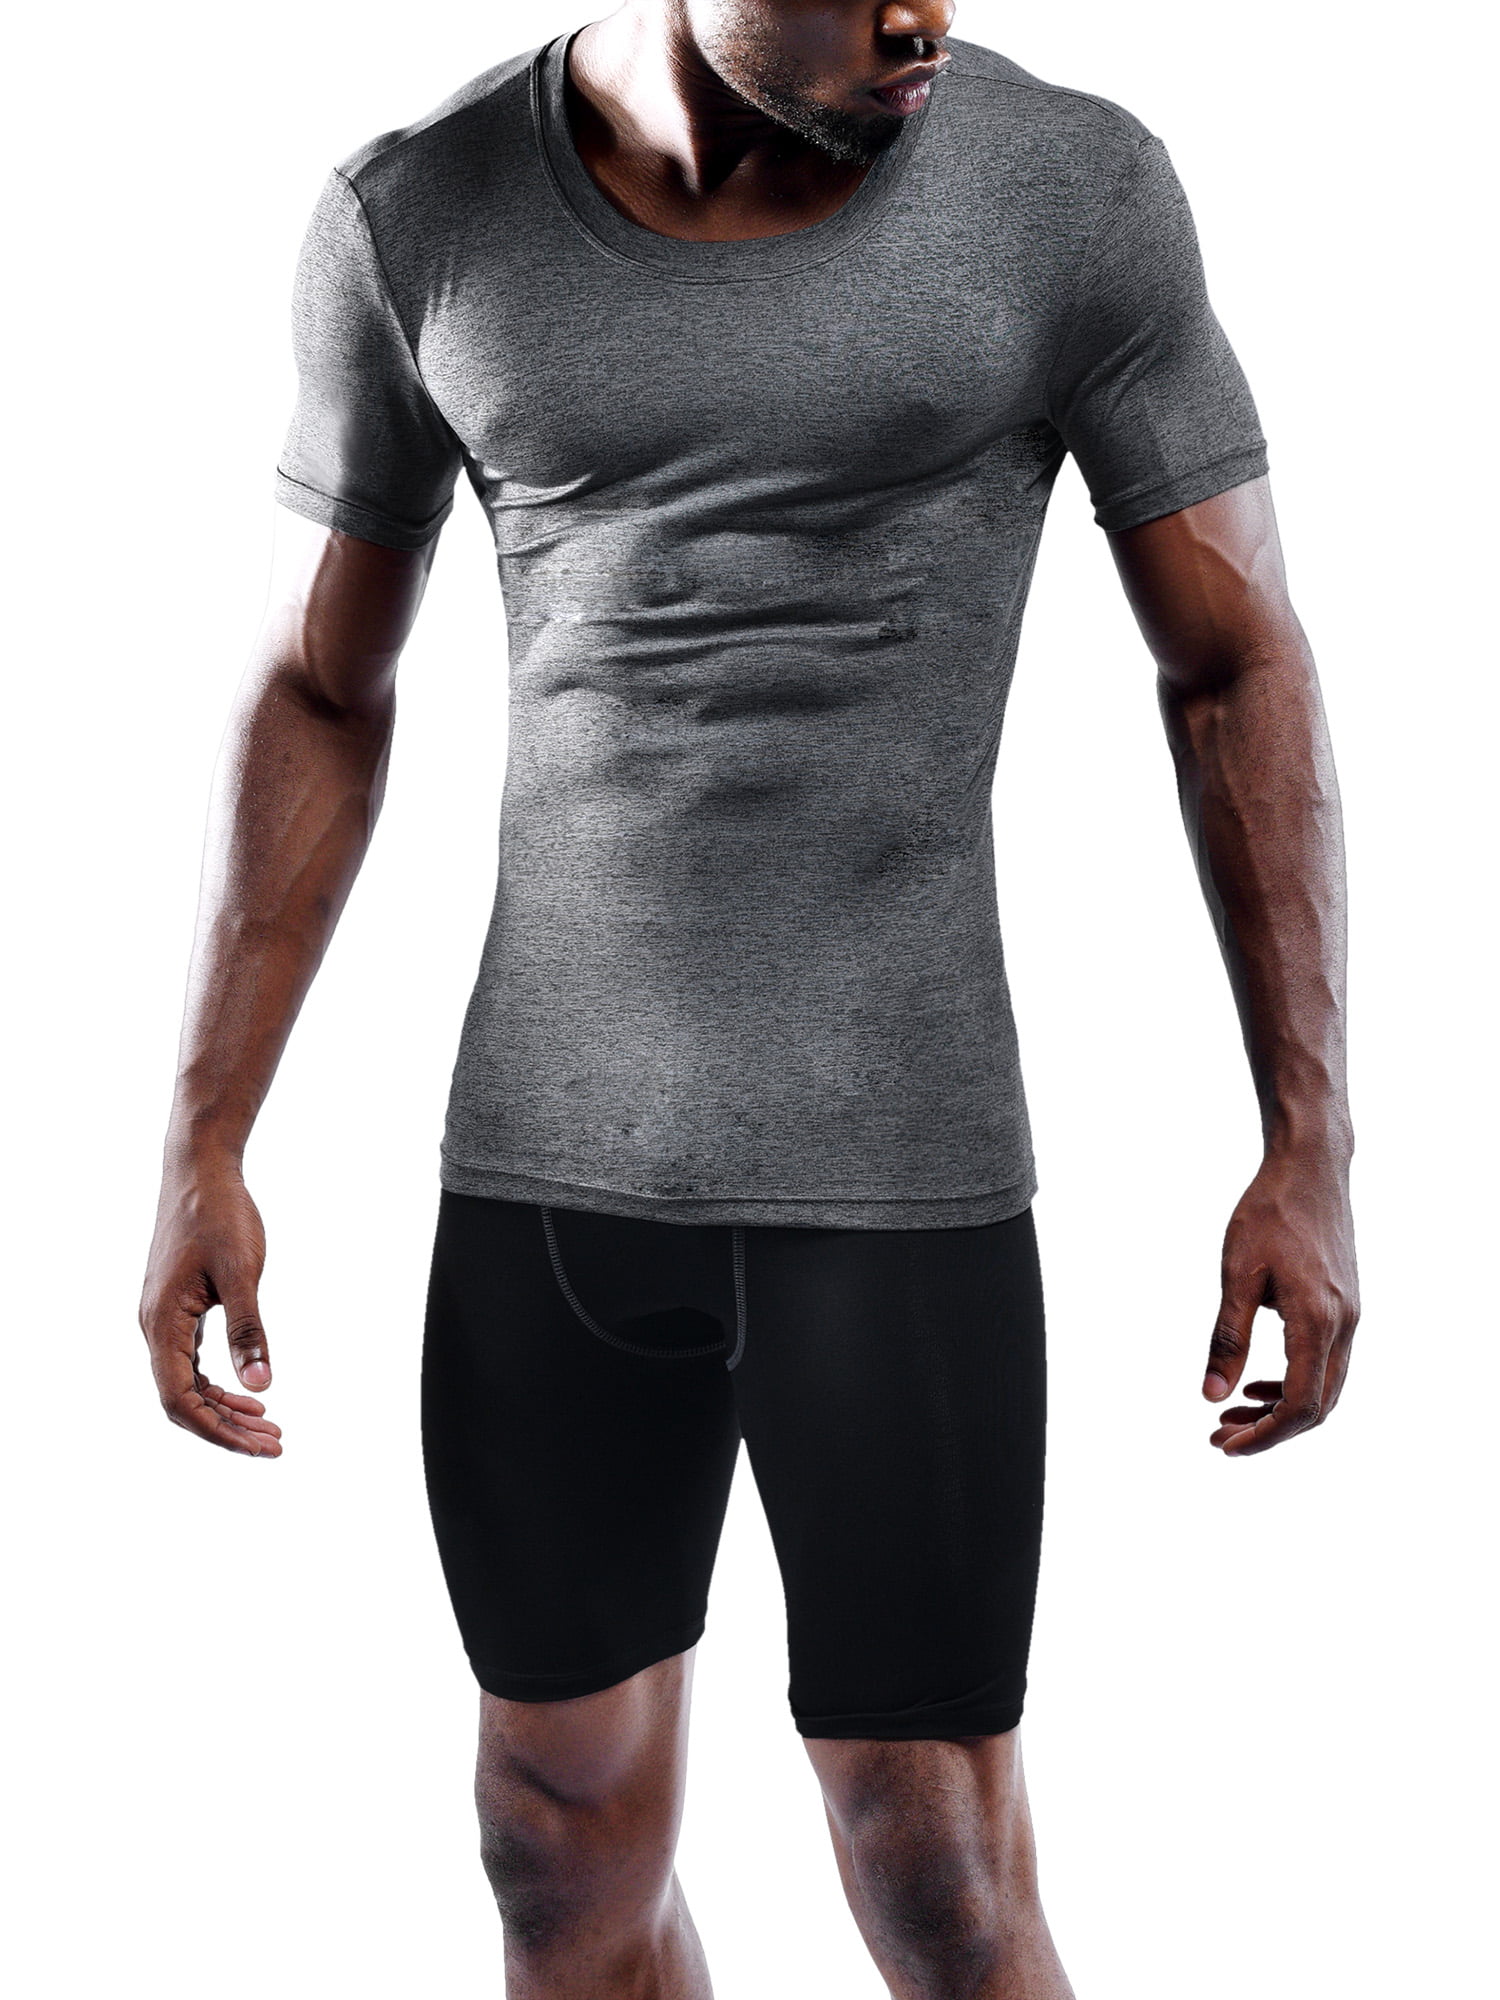 NELEUS Men's Athletic Compression Shirt Base Layer Tight Tops